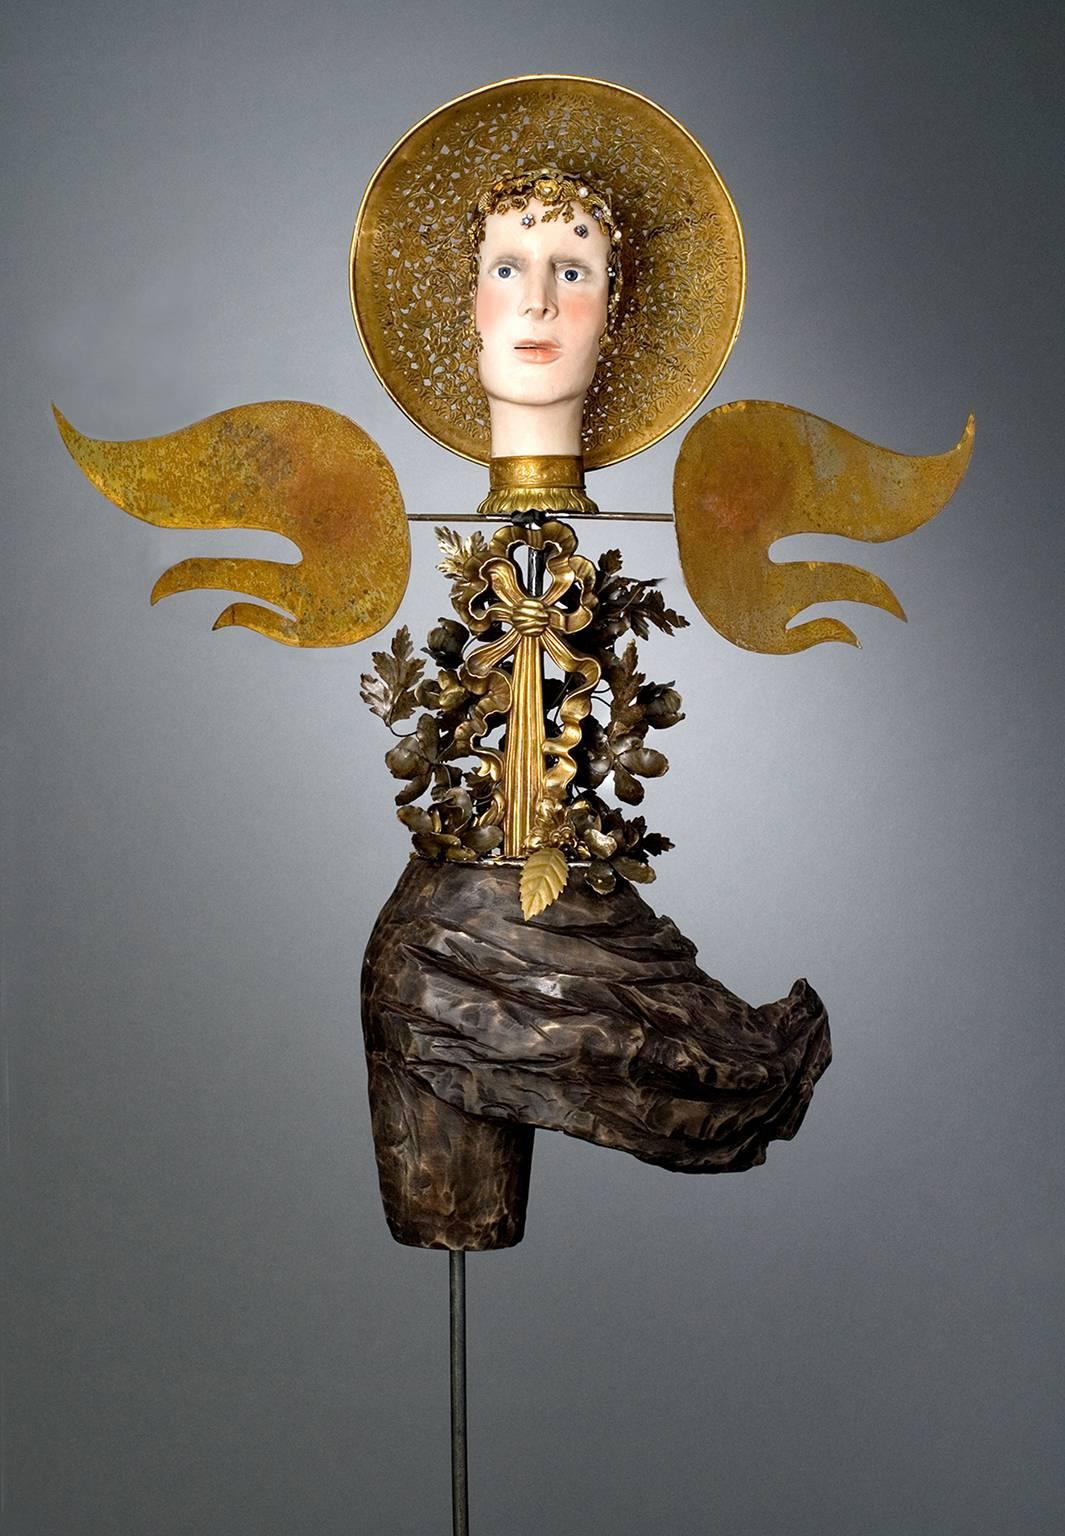 Lannie Hart Figurative Sculpture - "Winged Virgin", female figure of wood, steel wings and golden halo